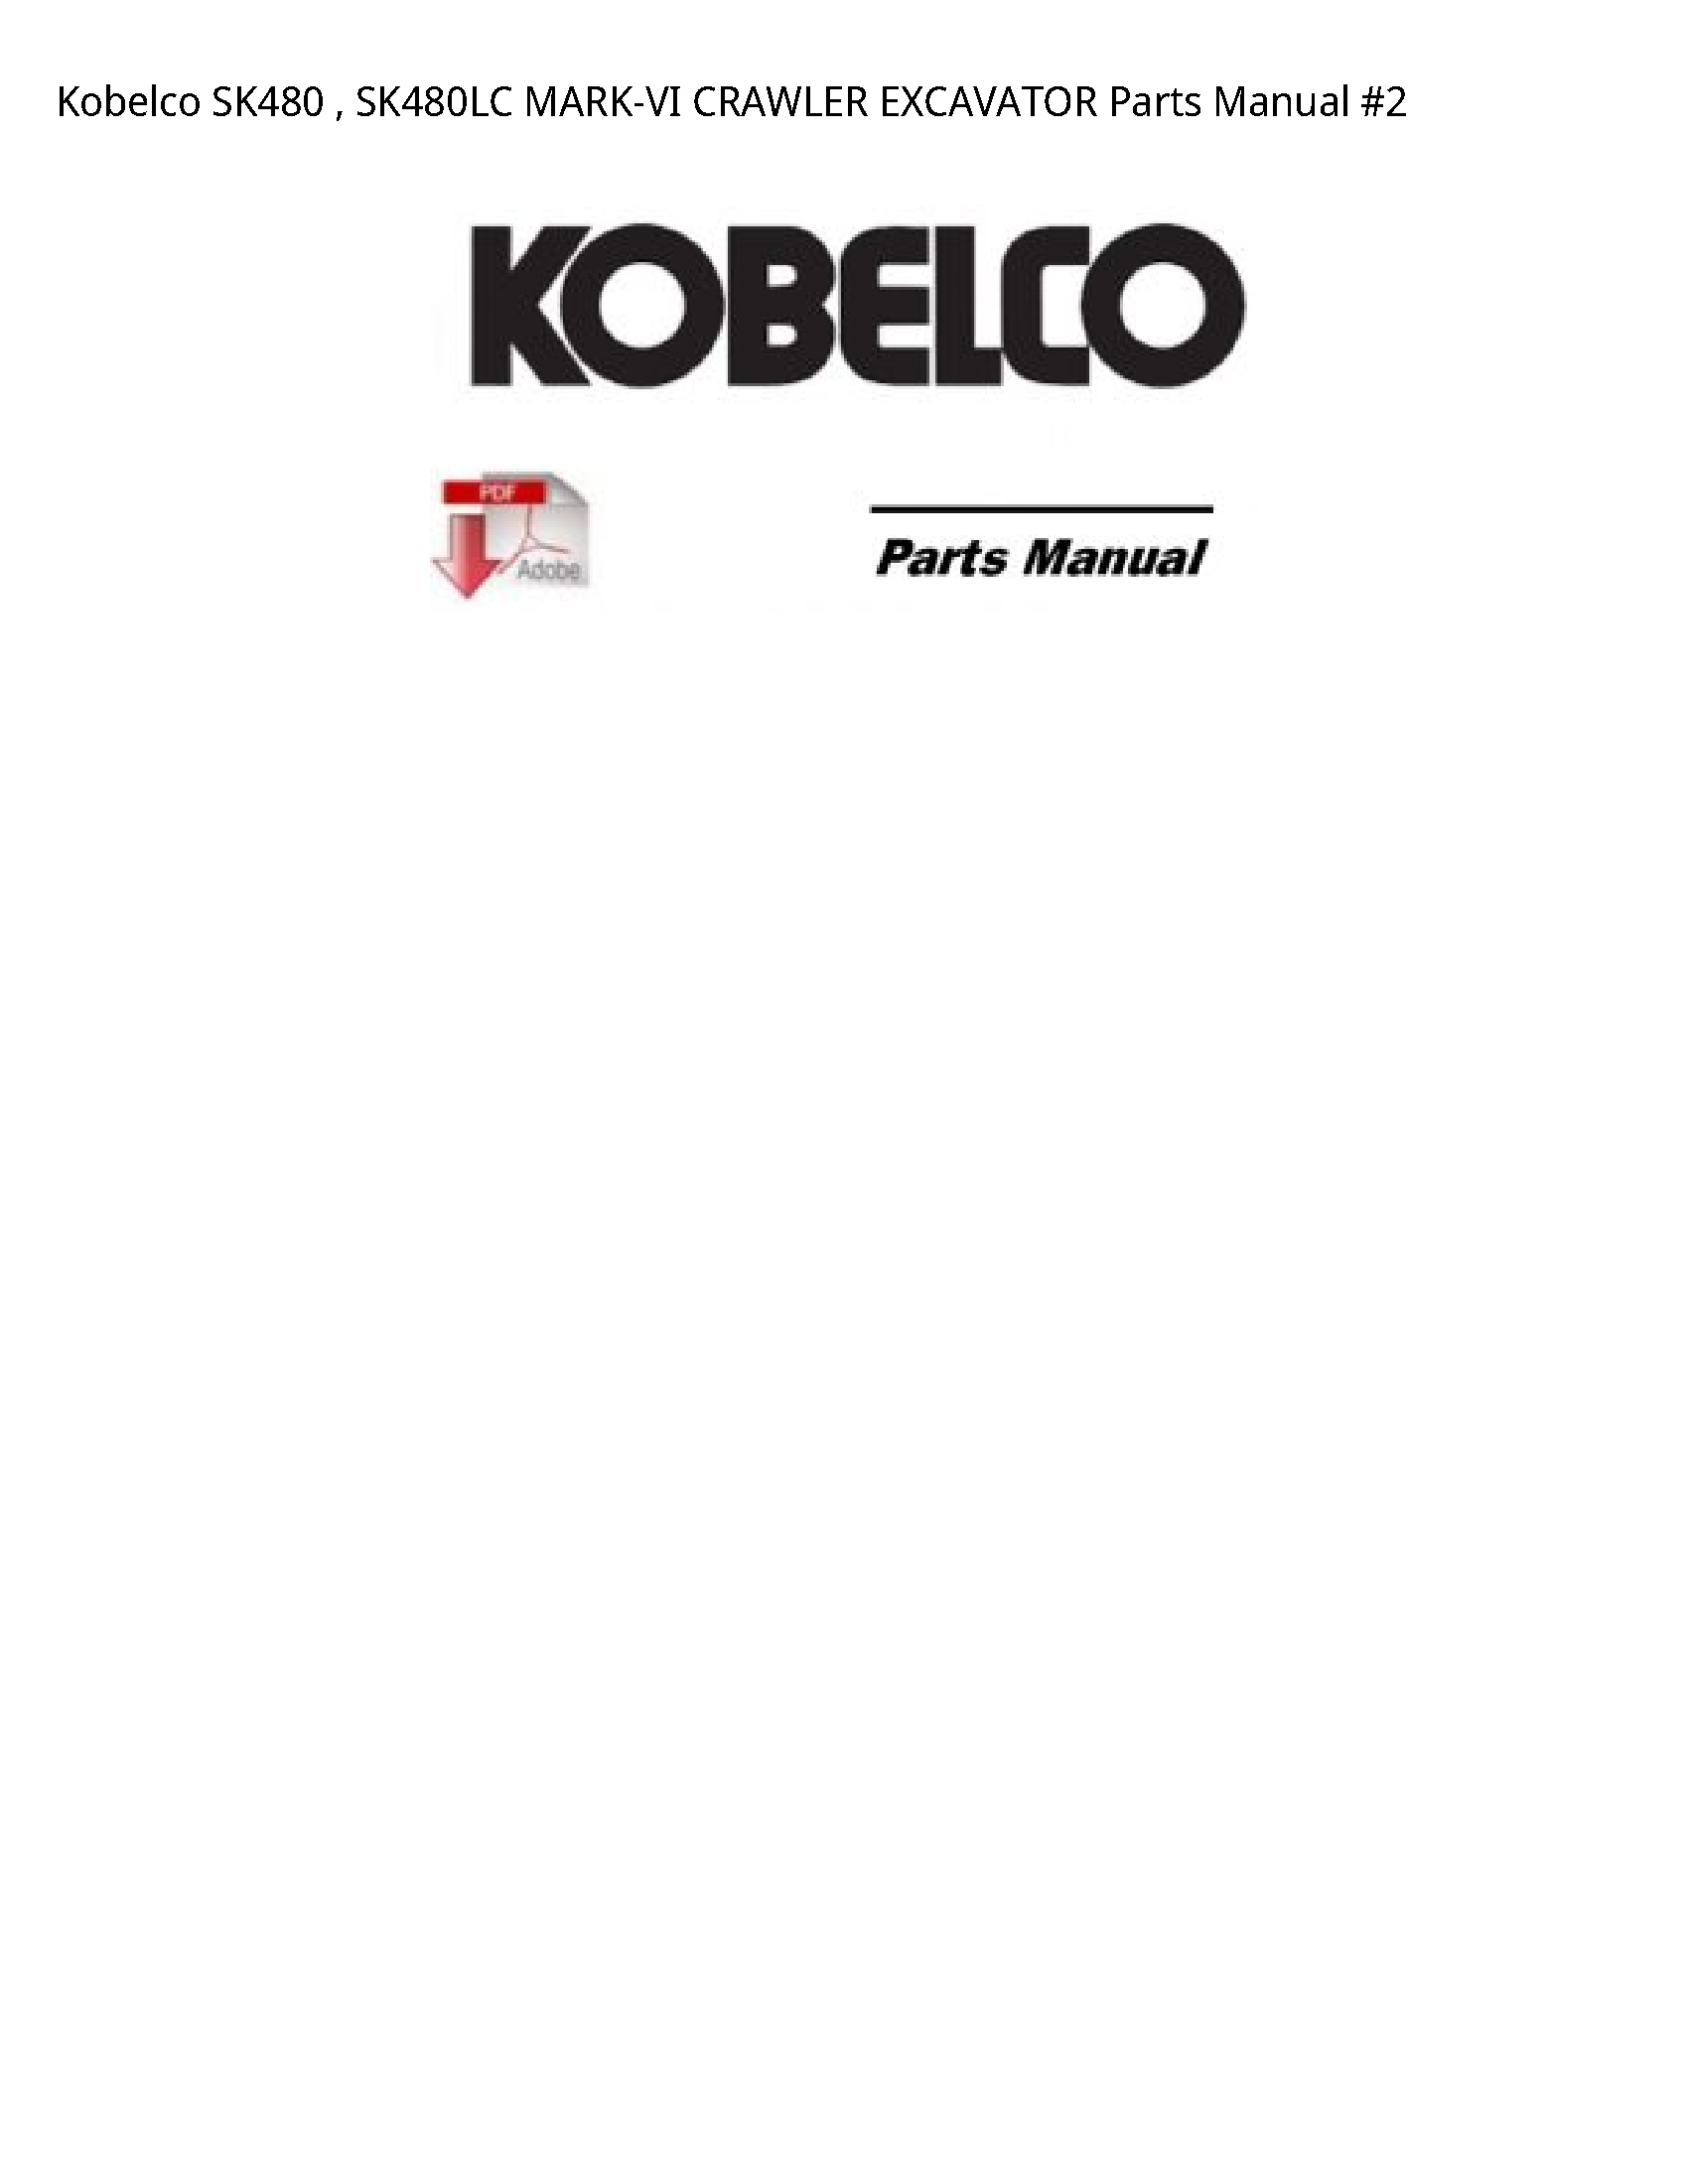 Kobelco SK480 MARK-VI CRAWLER EXCAVATOR Parts manual